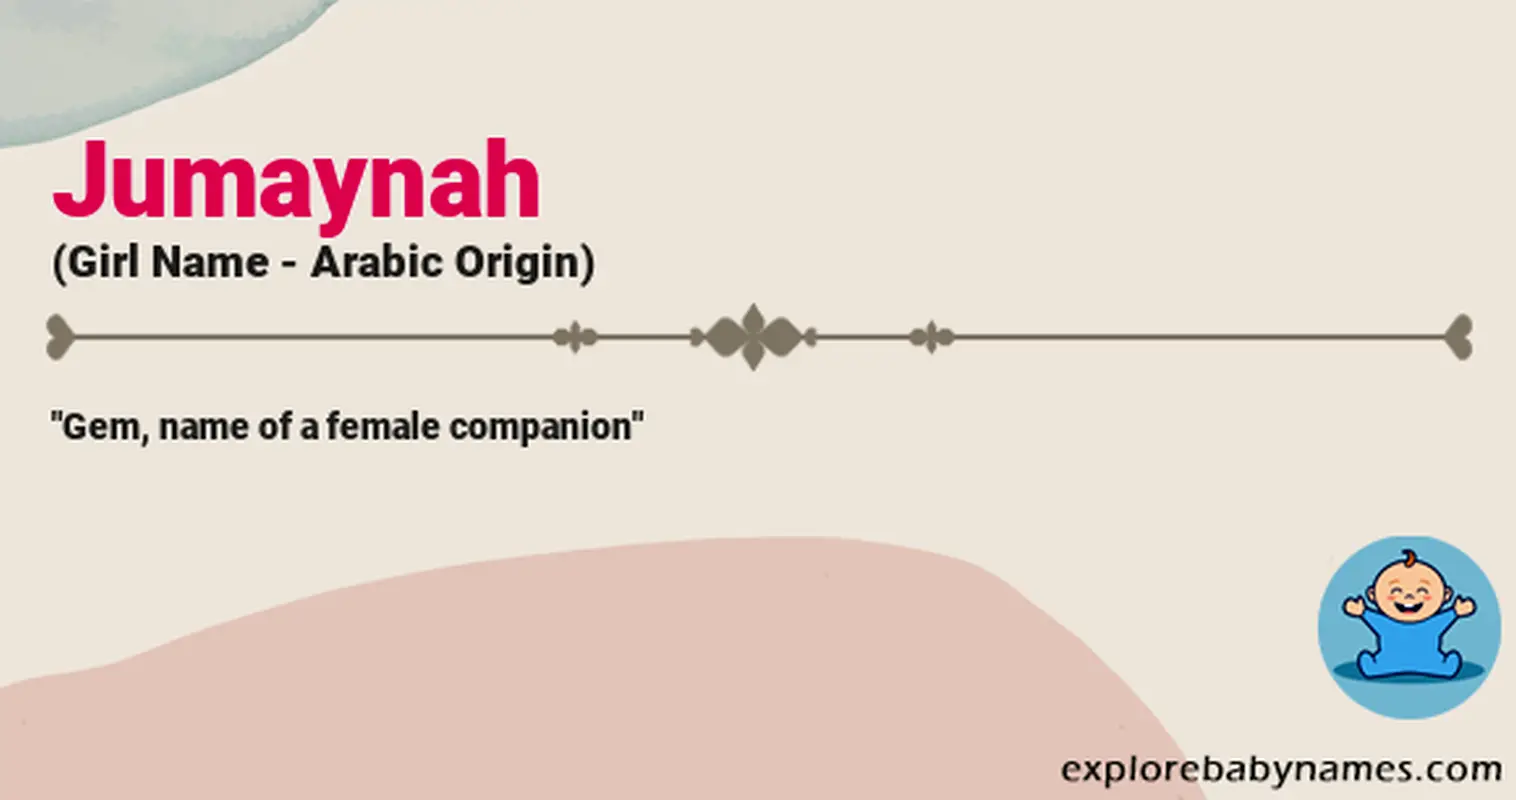 Meaning of Jumaynah